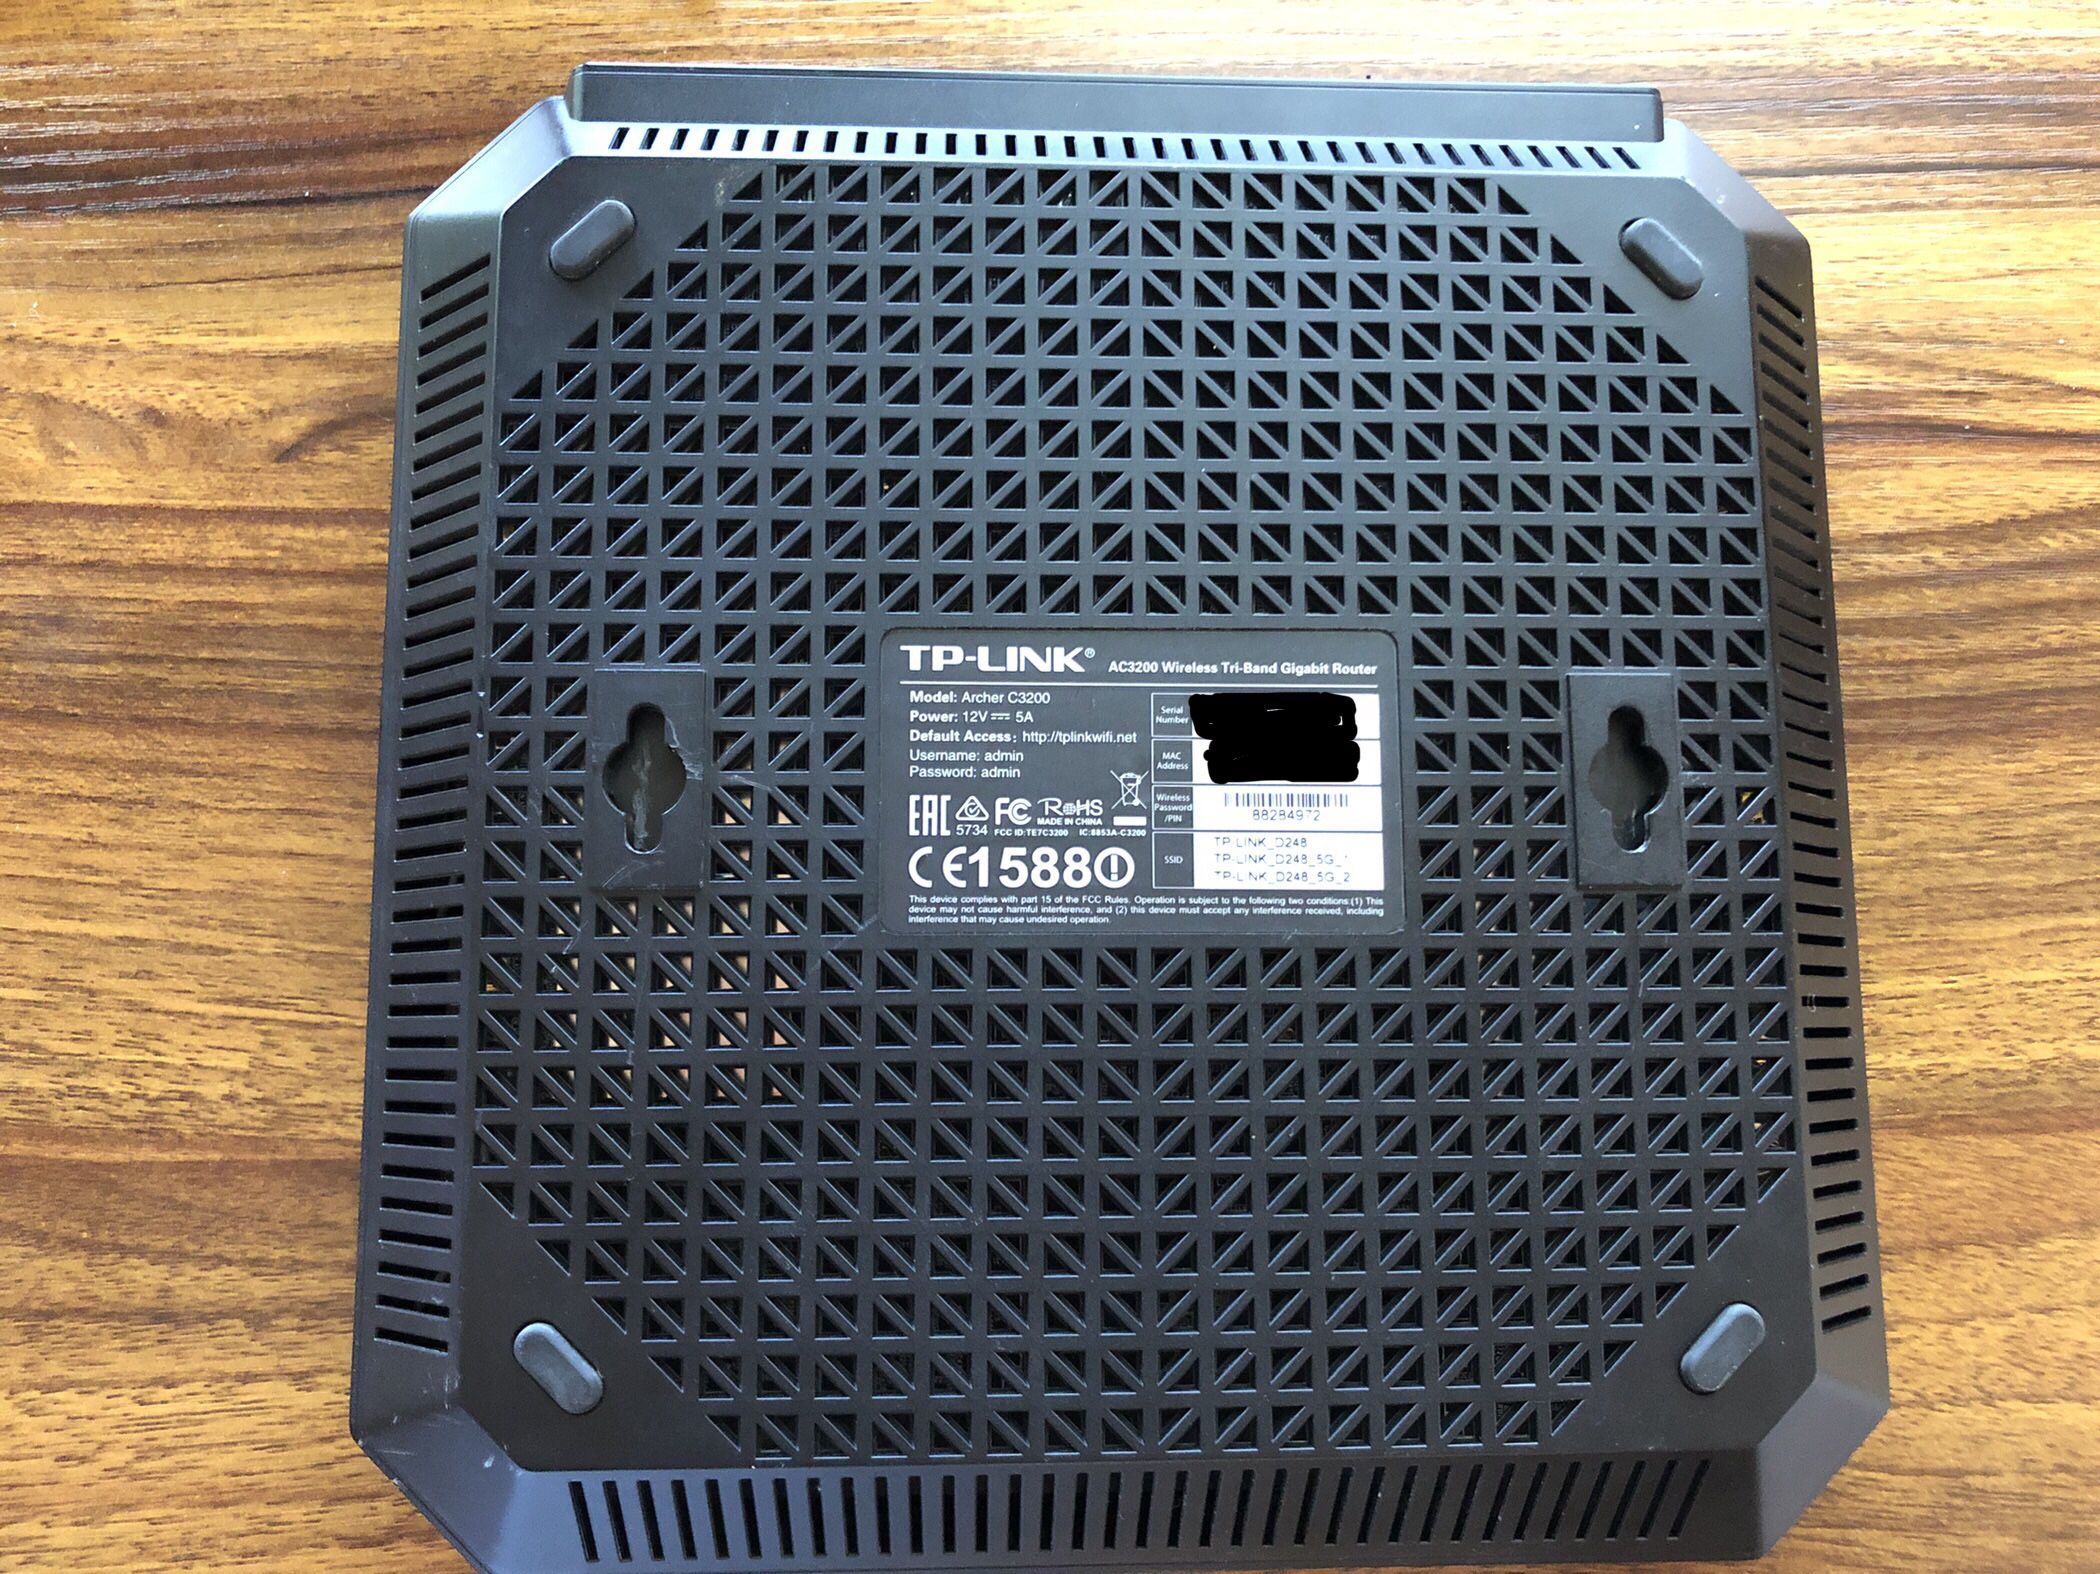 AC3200 Wireless Tri-Band Gigabit WiFi Router